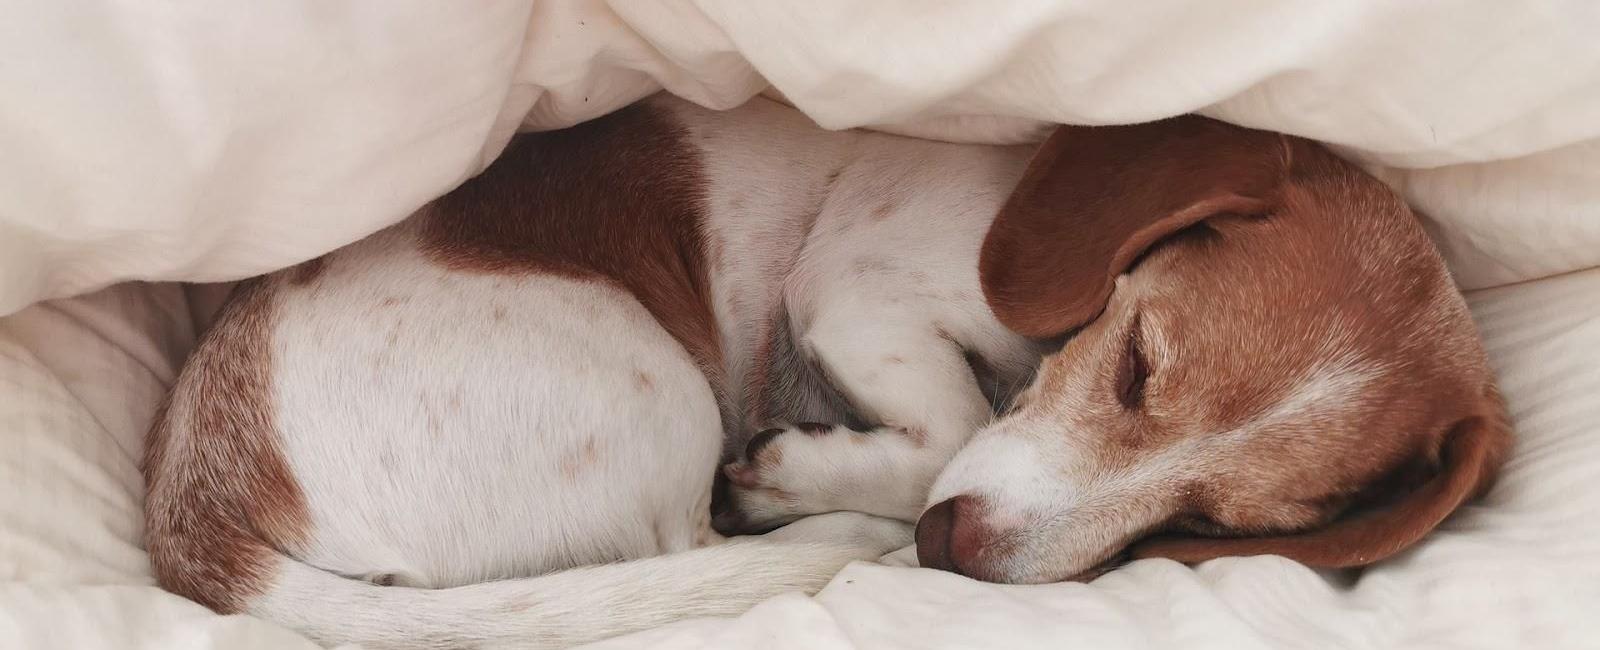 Why Do Dogs Howl in Their Sleep?